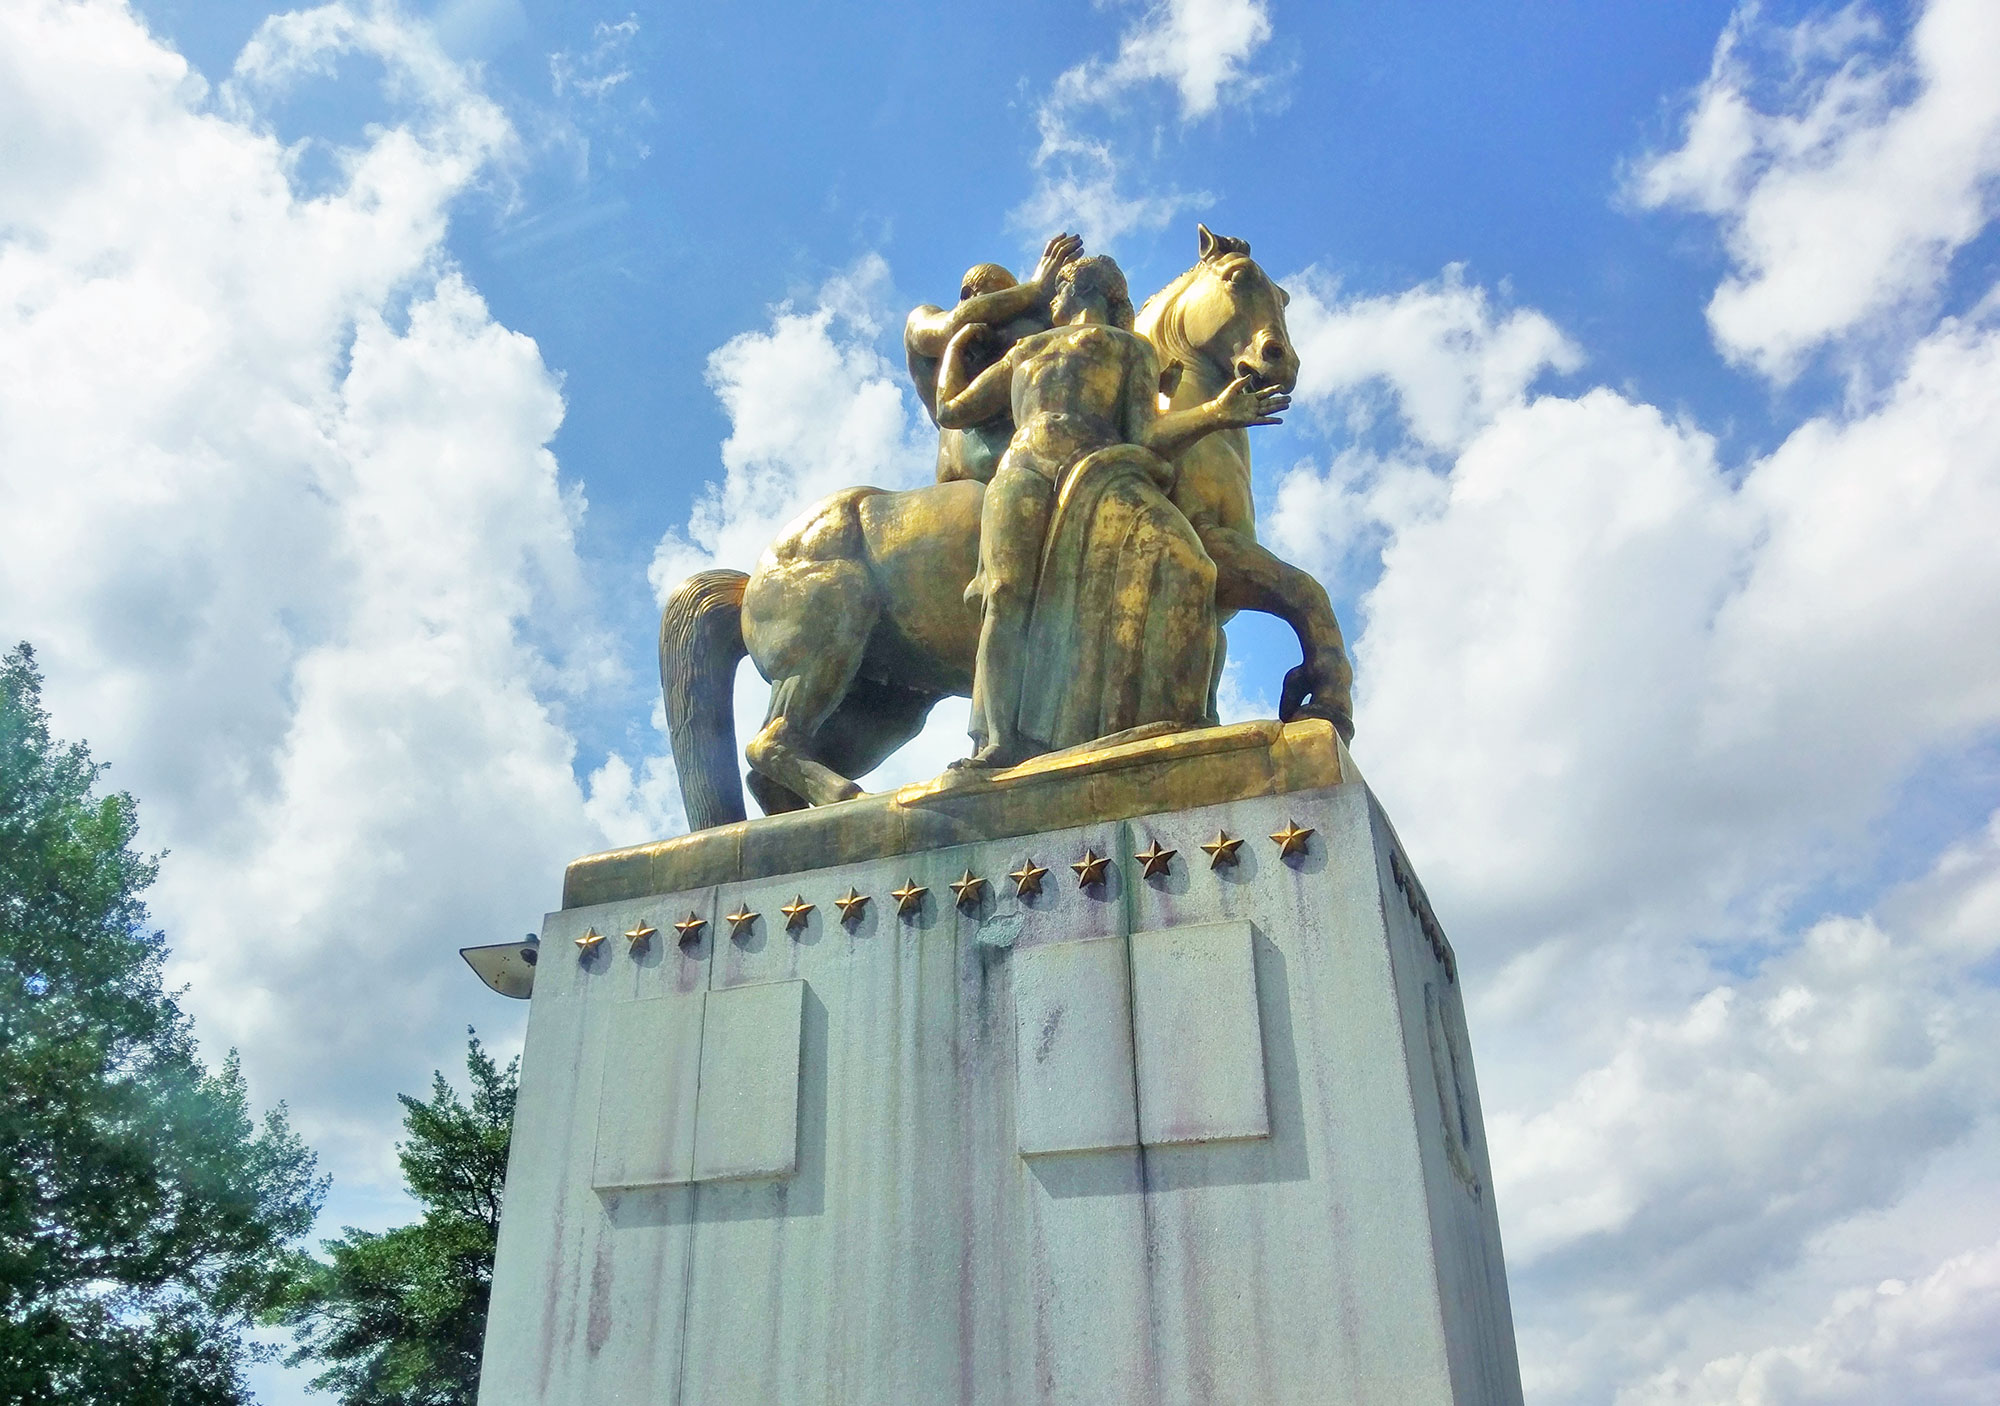 A statue near the Potomac River in Washington D.C.